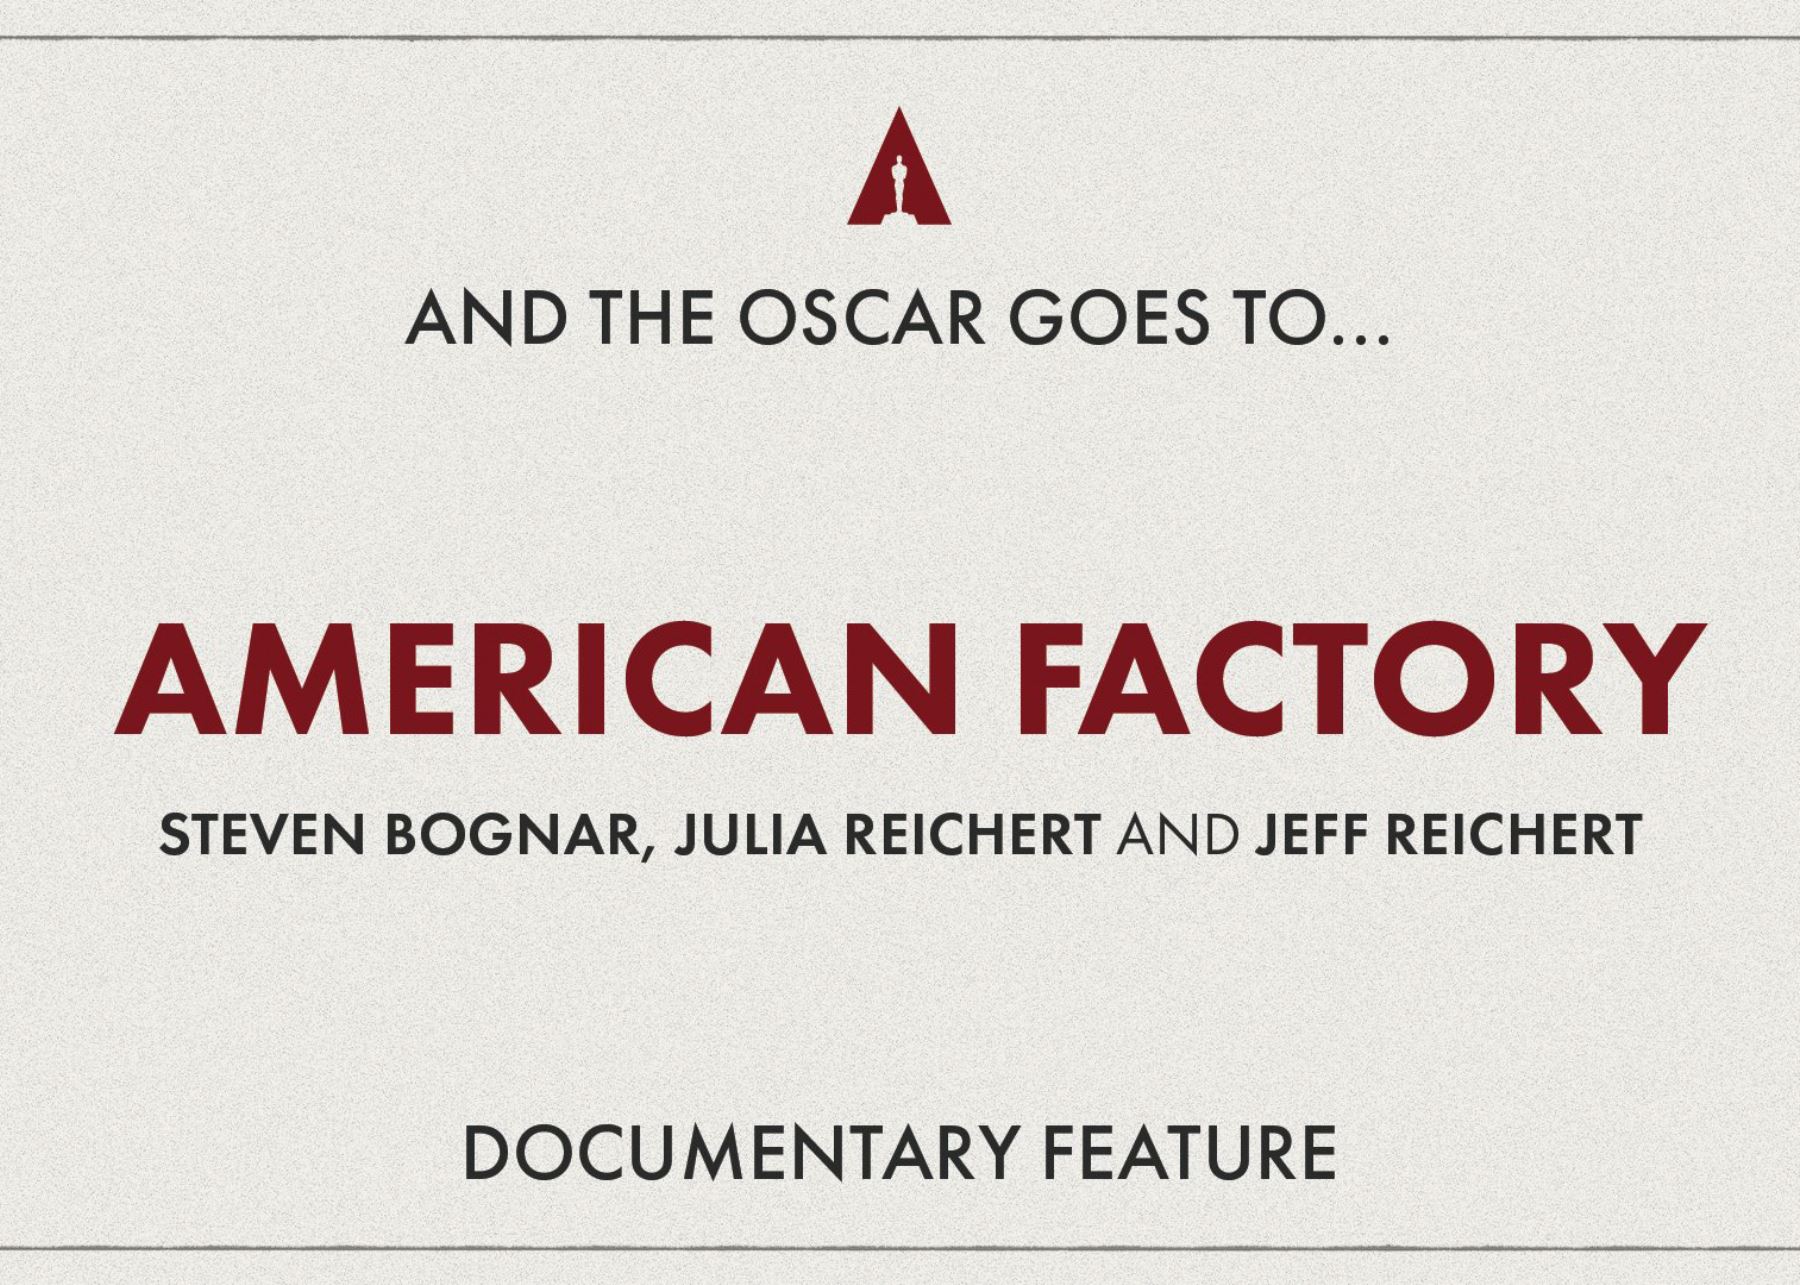 American Factory ganó el Óscar a mejor documental. Foto: Twitter / @TheAcademy